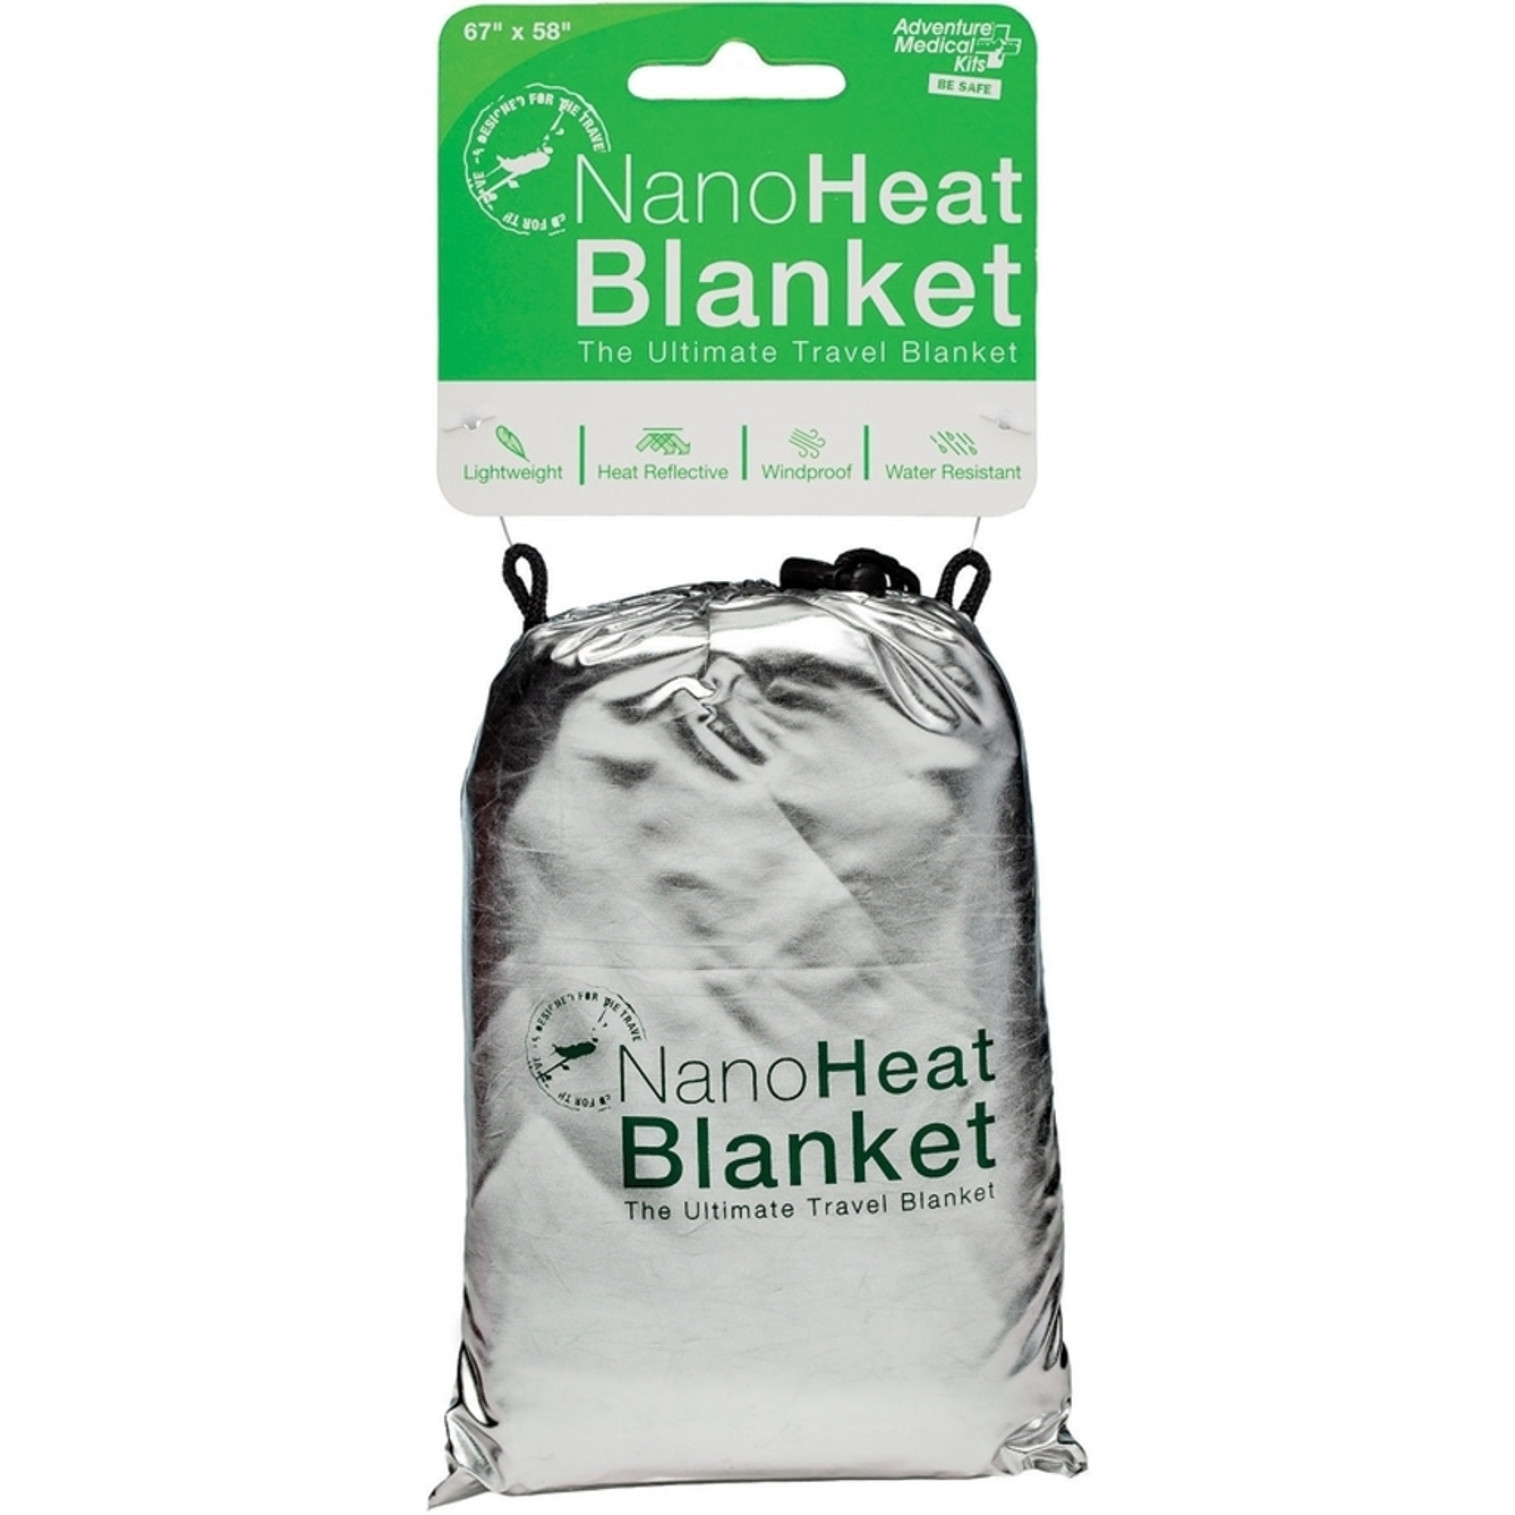 NanoHeat Blanket